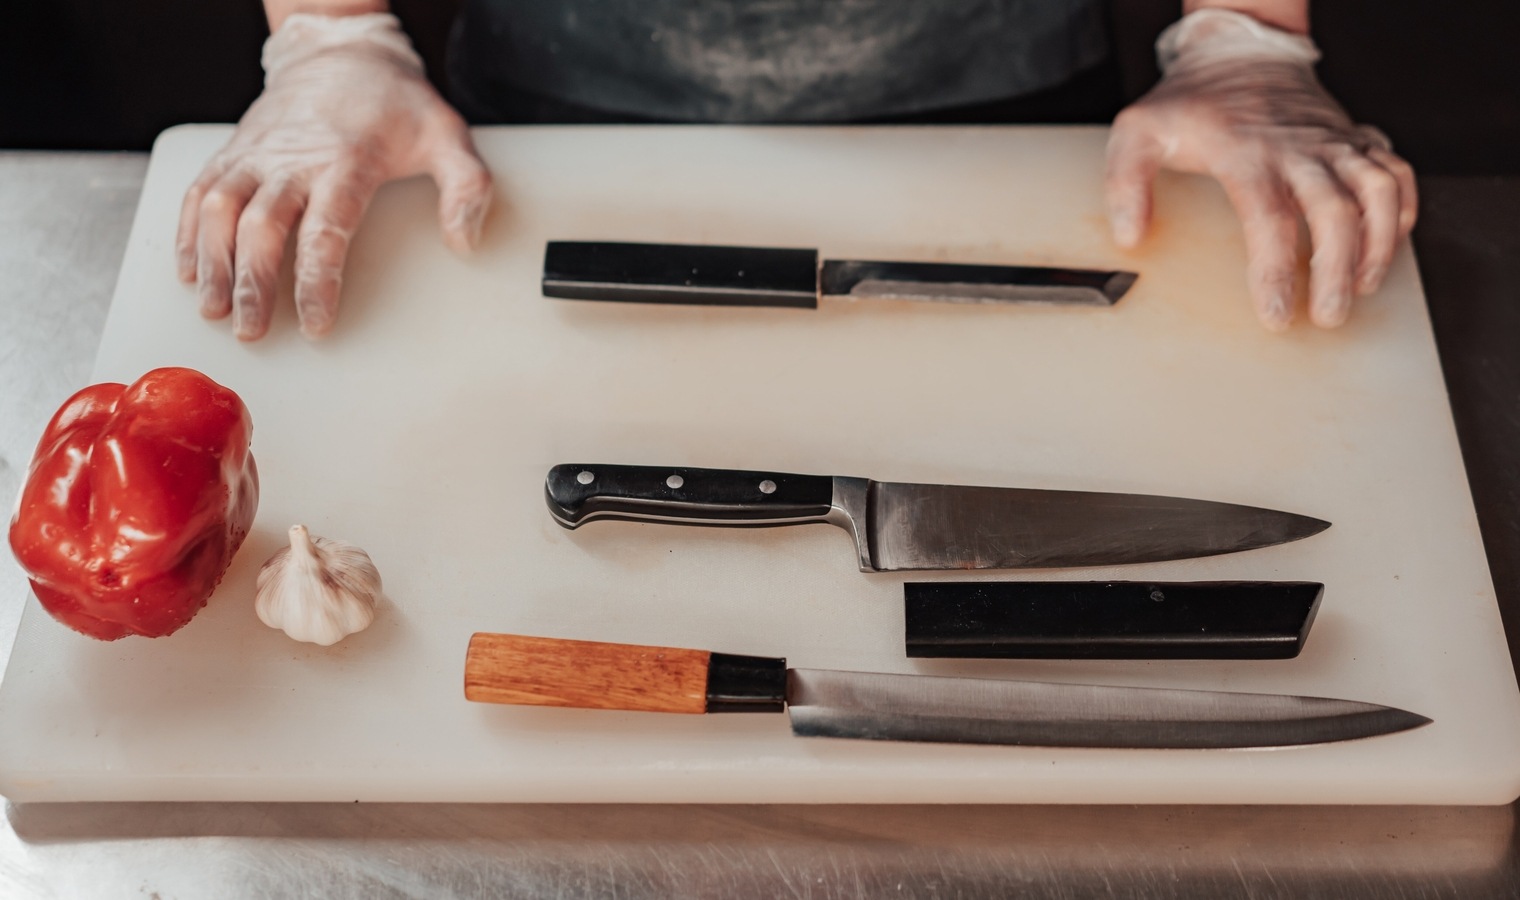 8 Steak Knife Set Serrated Edge Steel Utility Knives Steakhouse Cutlery Utensil